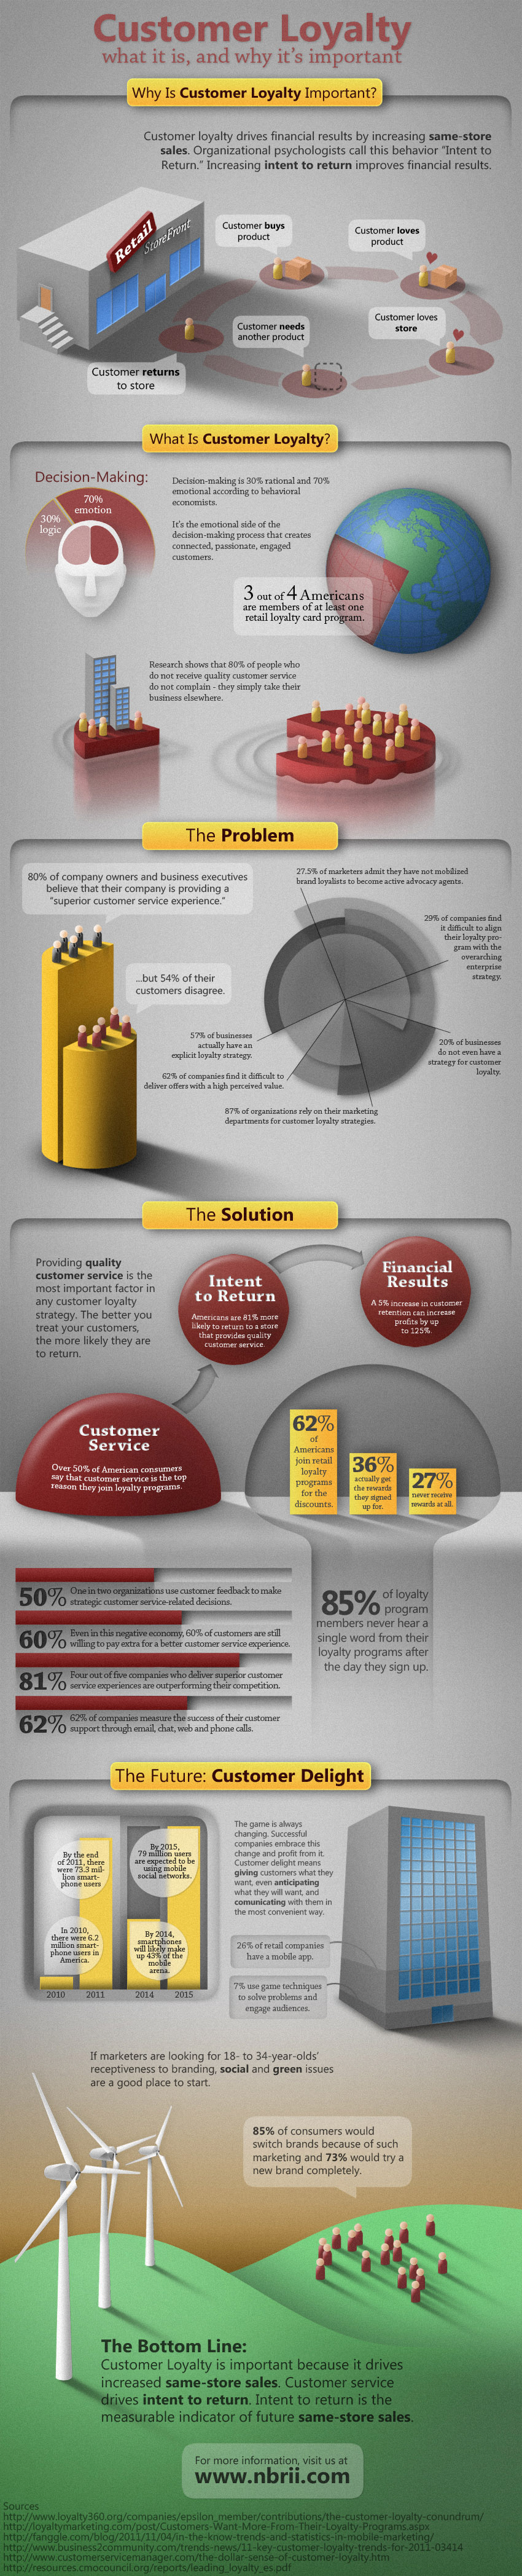 NBRI-Customer-Loyalty-Infographic